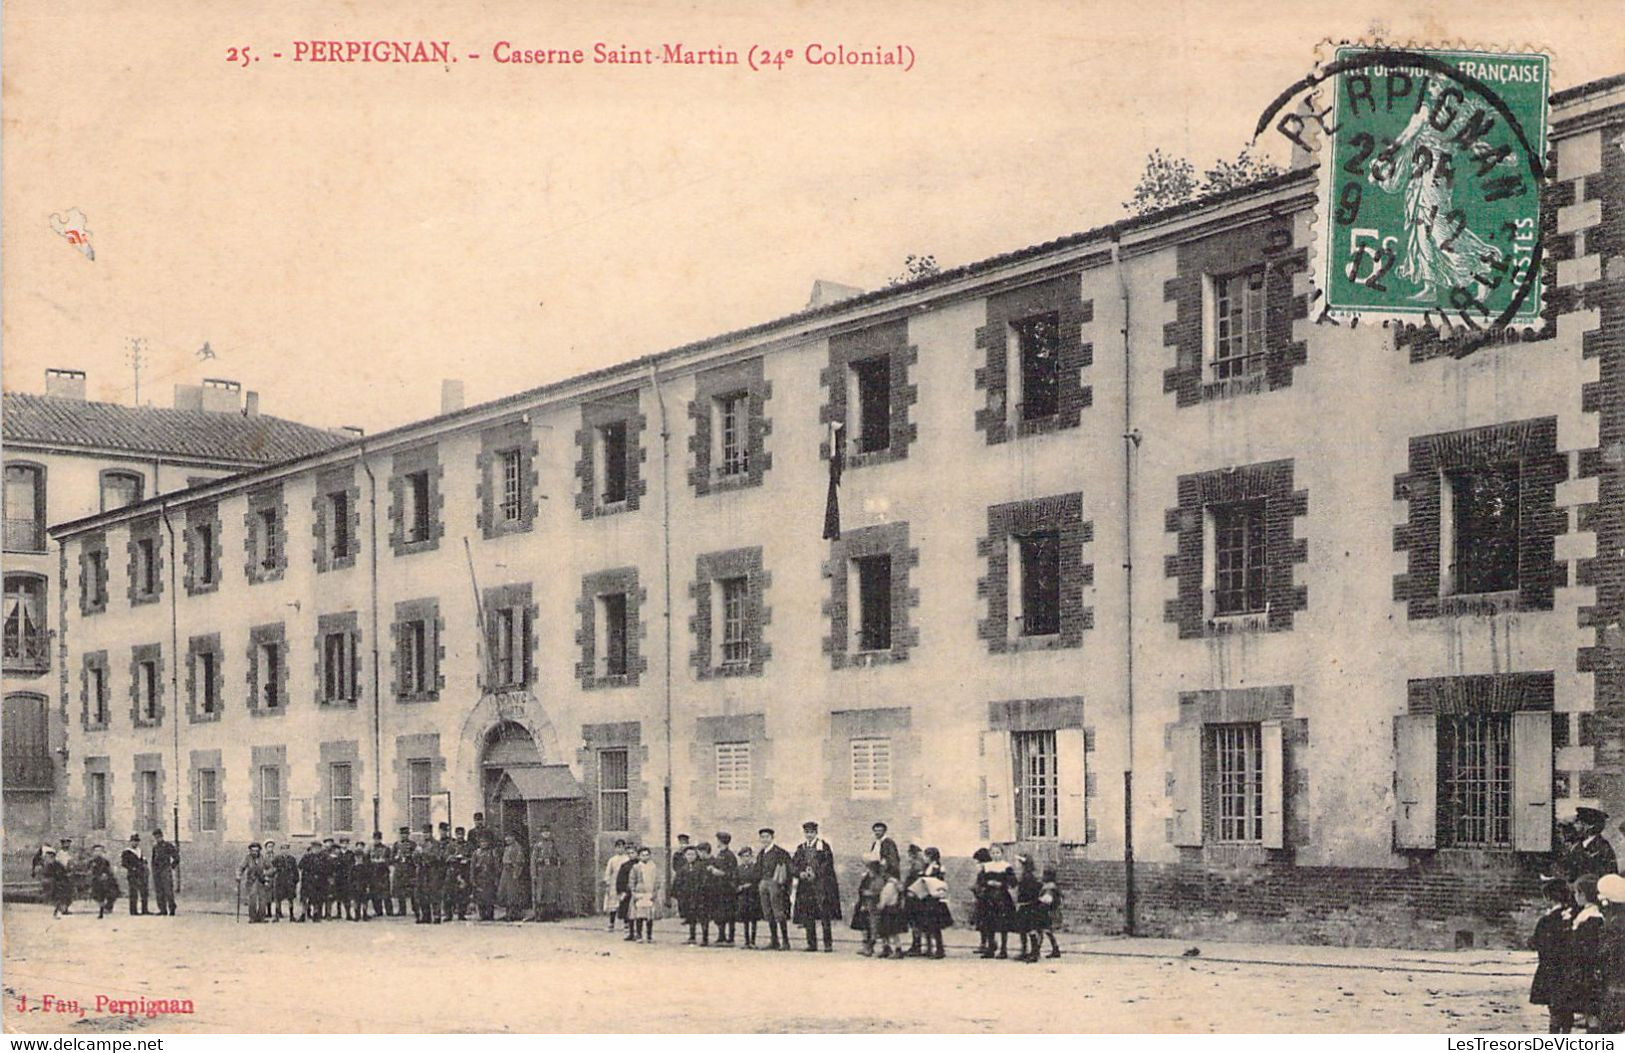 MILITARIA - PERPIGNAN - Caserne Saint Martin - 24è Colonial - J Fau Perpignan - Carte Postale Ancienne - Kazerne